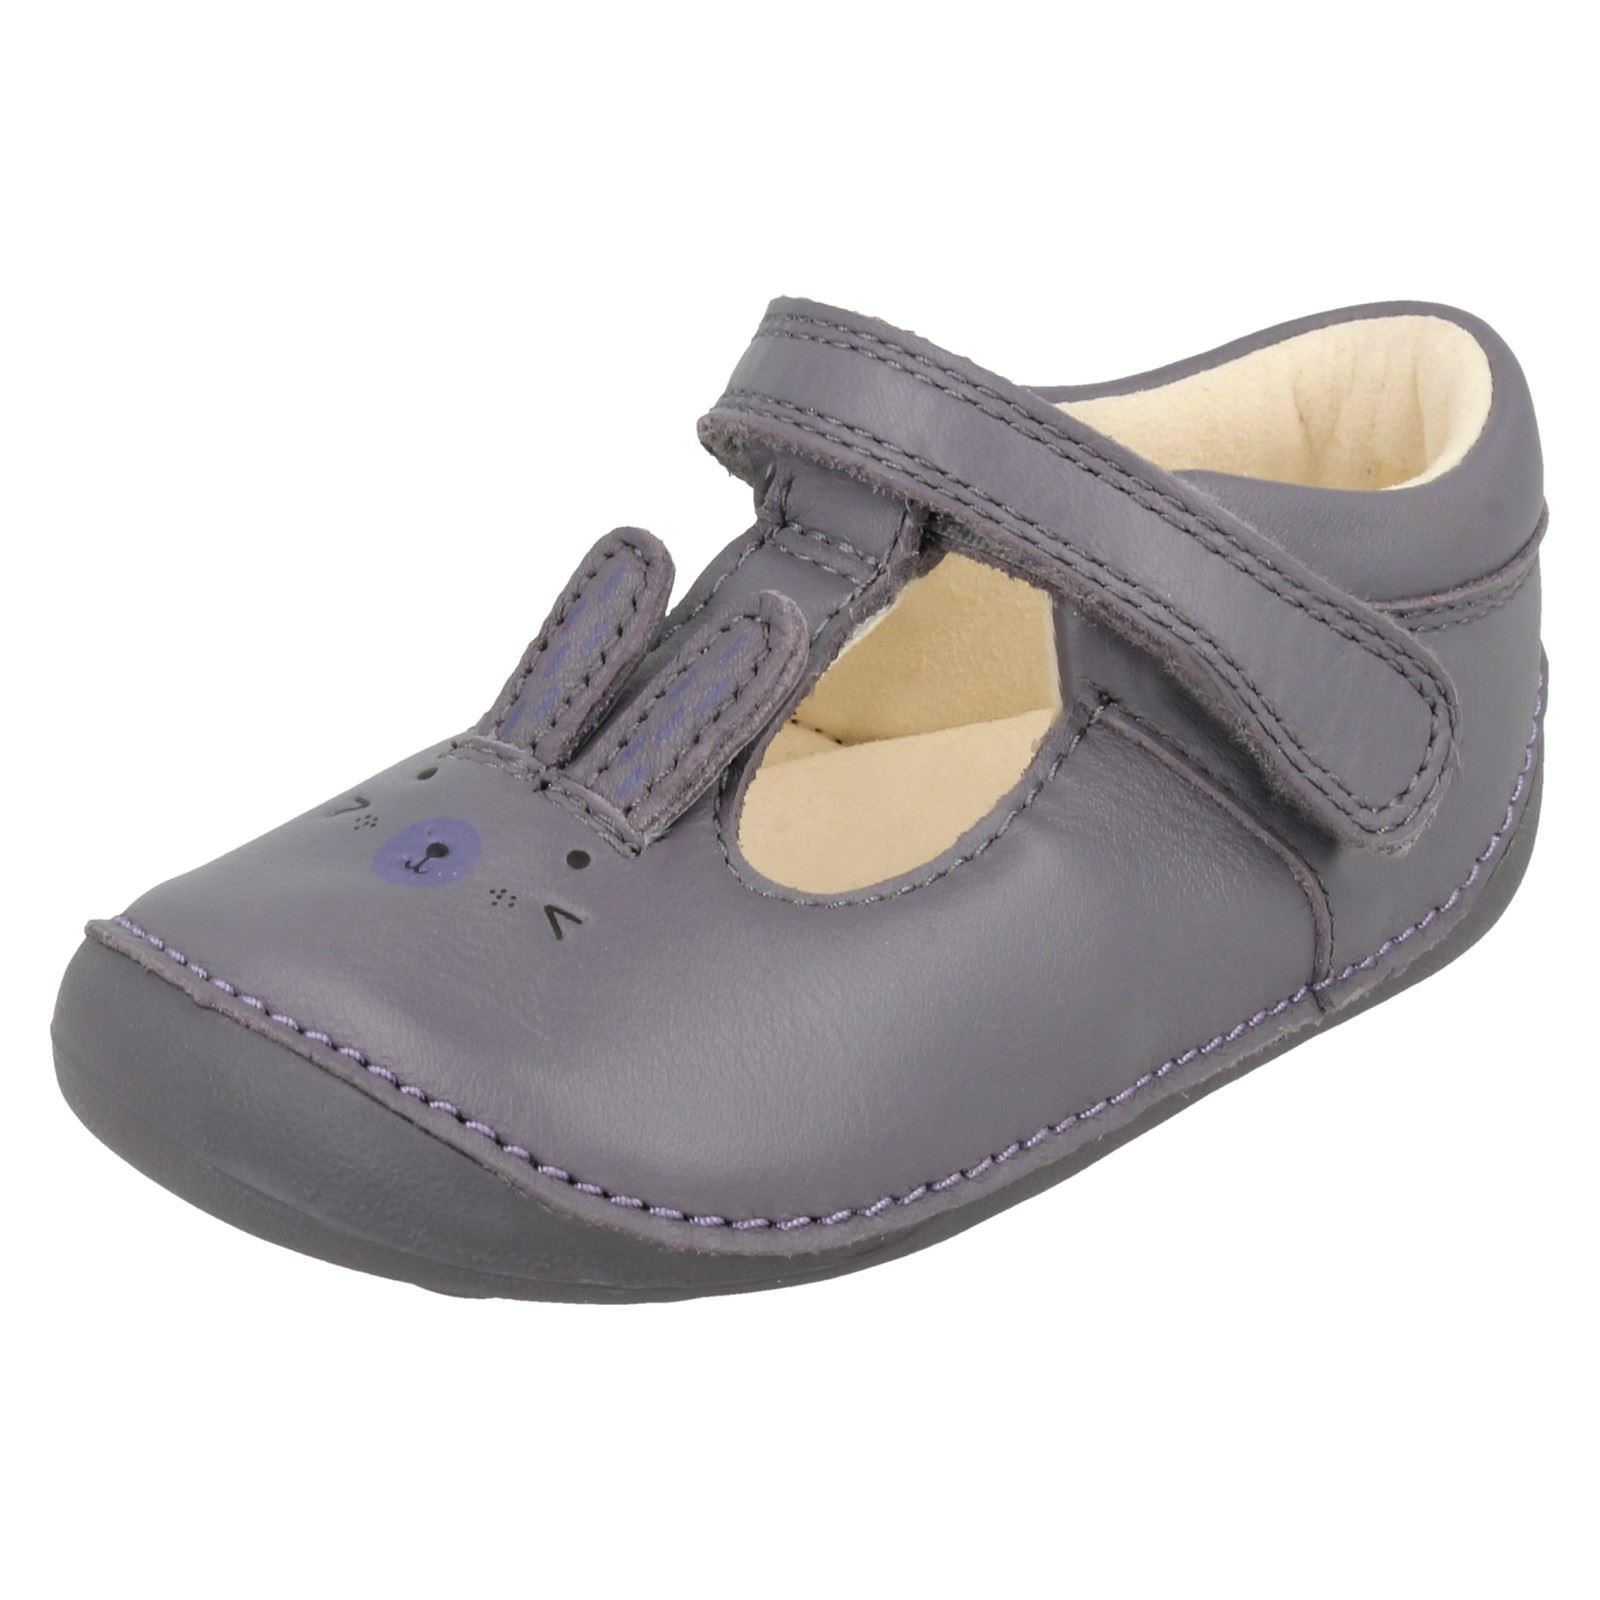 clarks little girl shoes